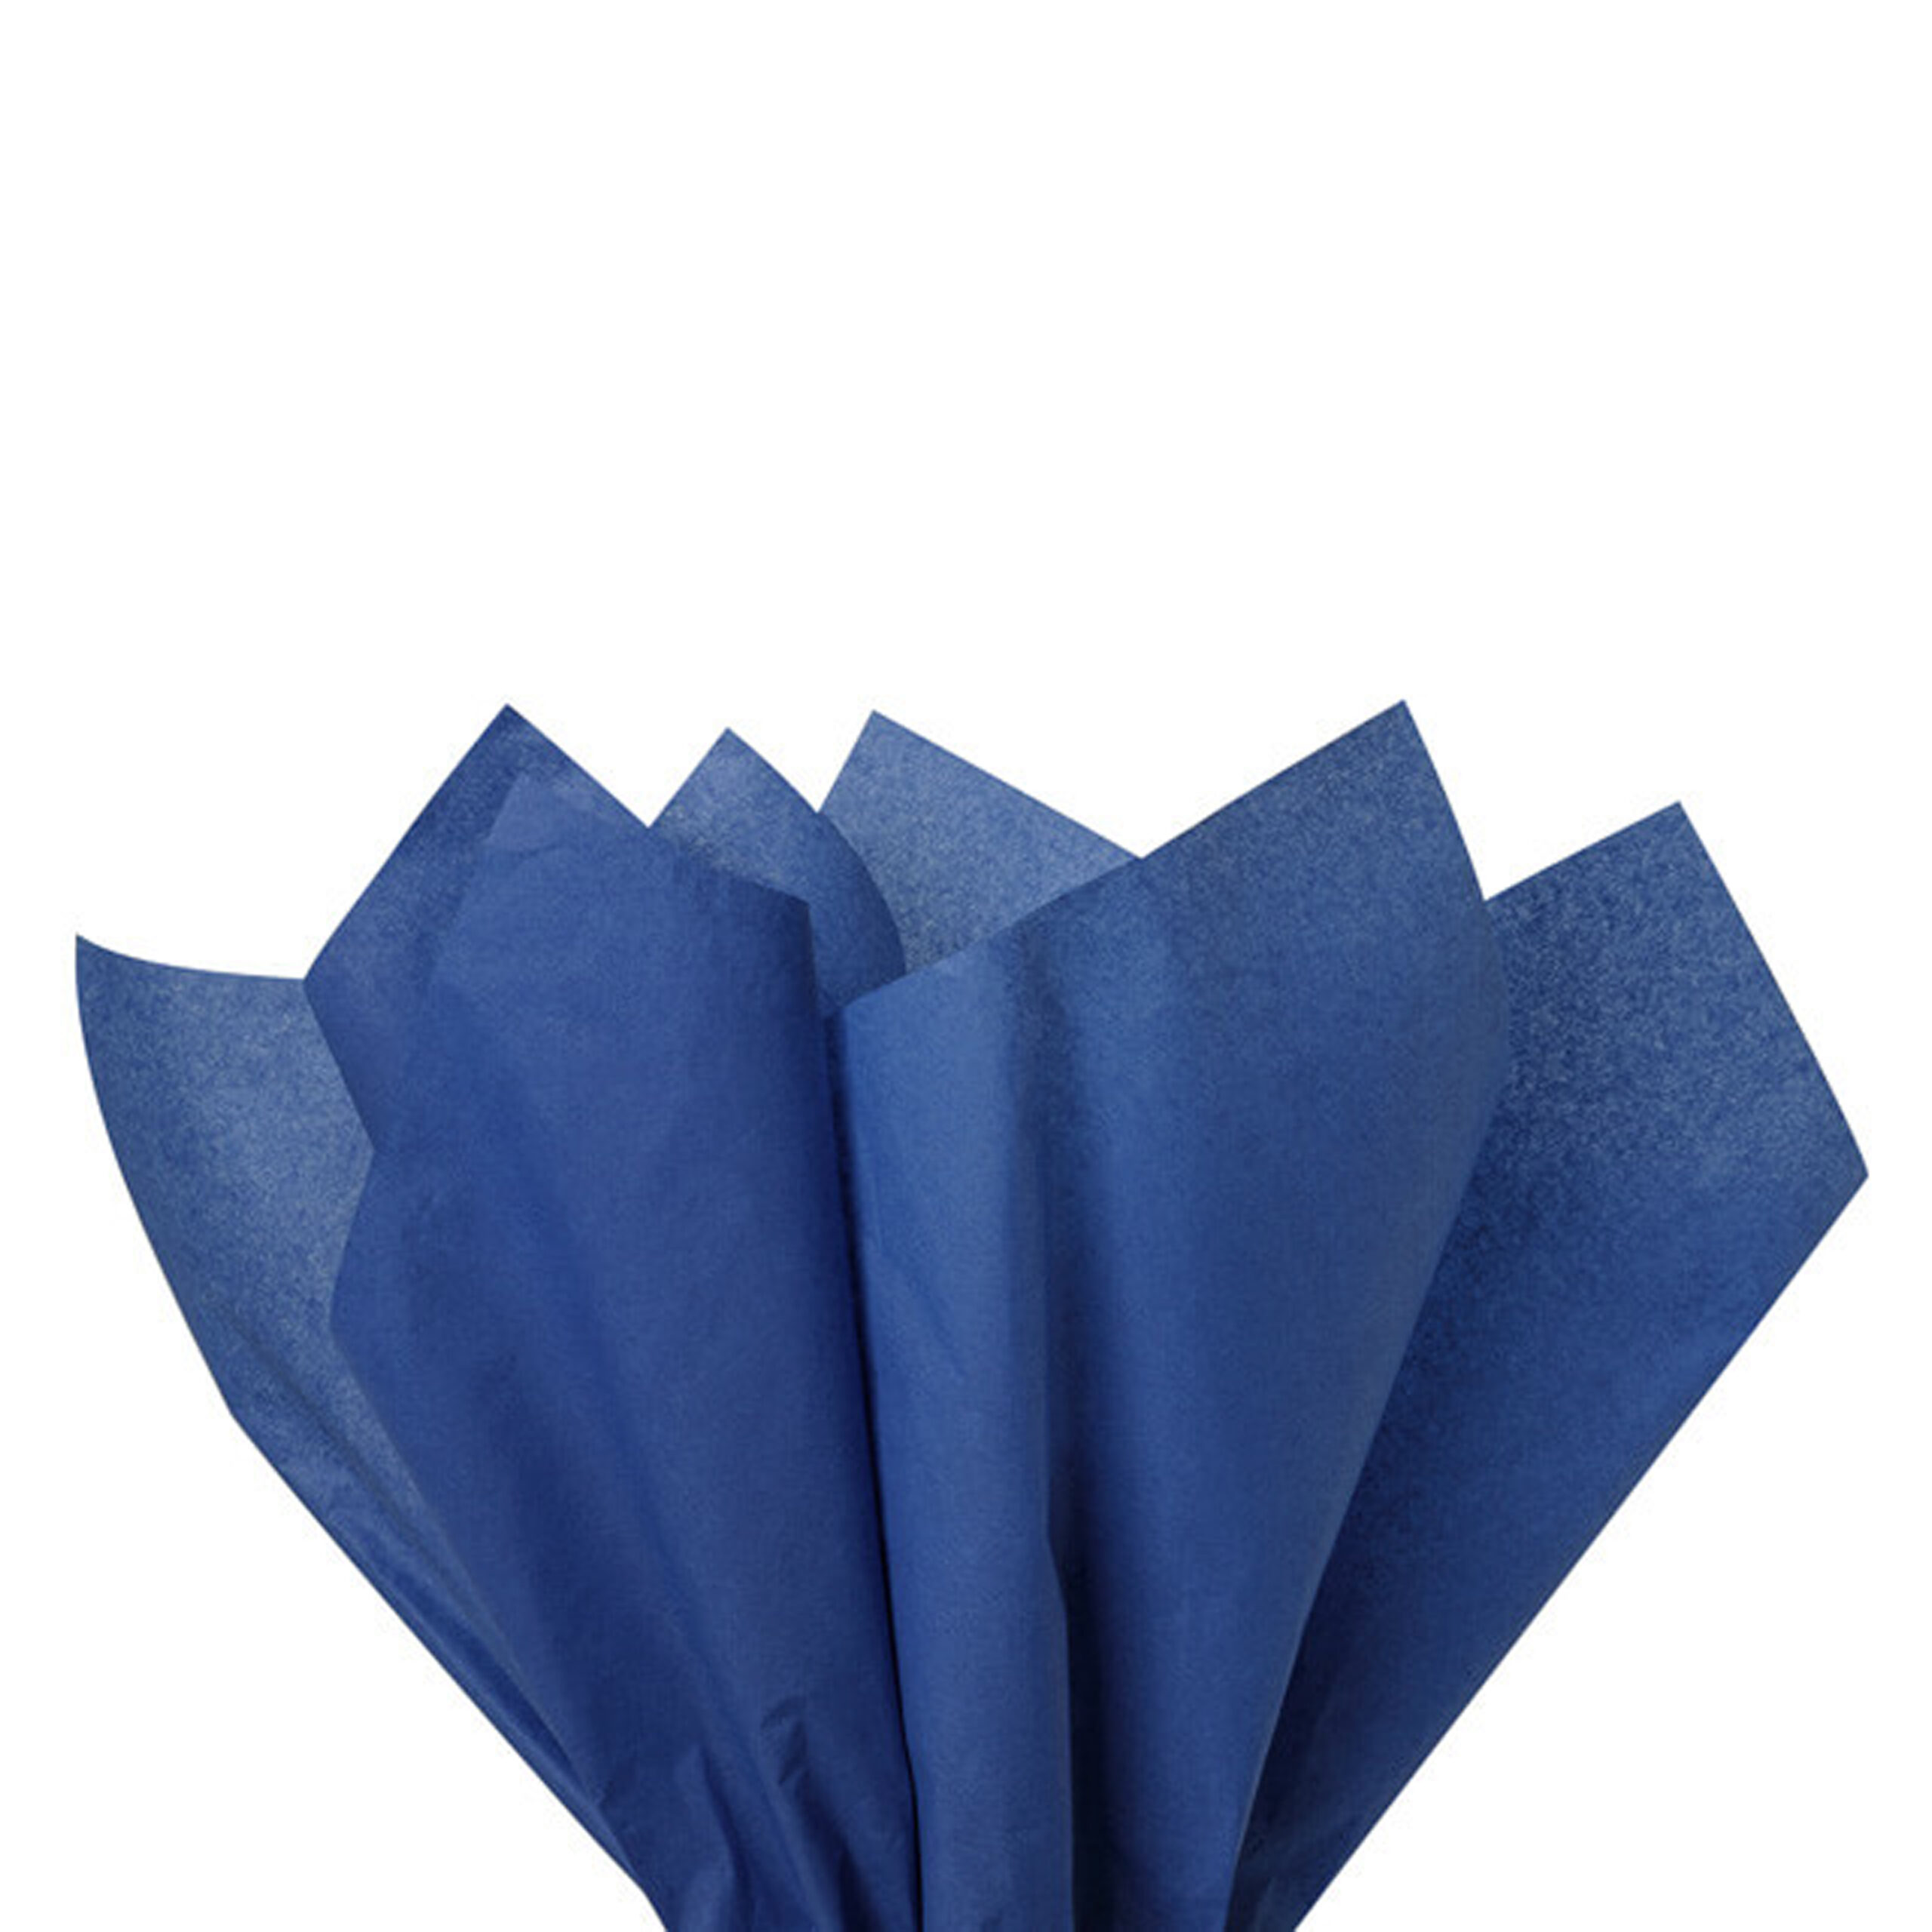 TISSUE PAPER
BRIGHTS 50x66cm
ROYAL BLUE (1x10)